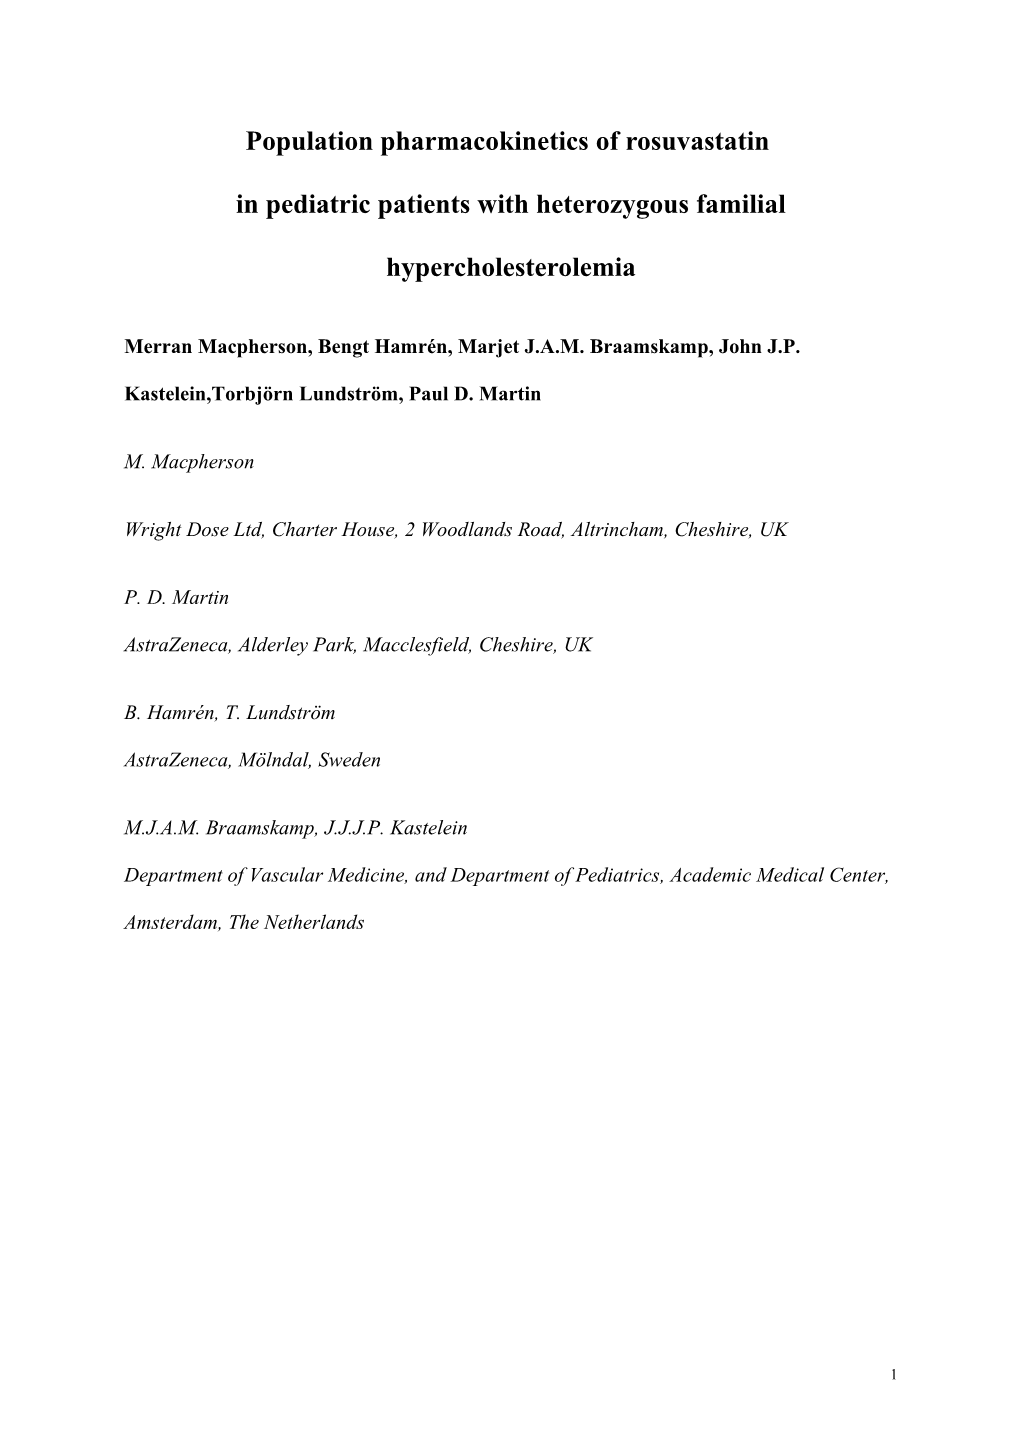 Population Pharmacokinetics of Rosuvastatin in Pediatric Patients with Heterozygous Familial